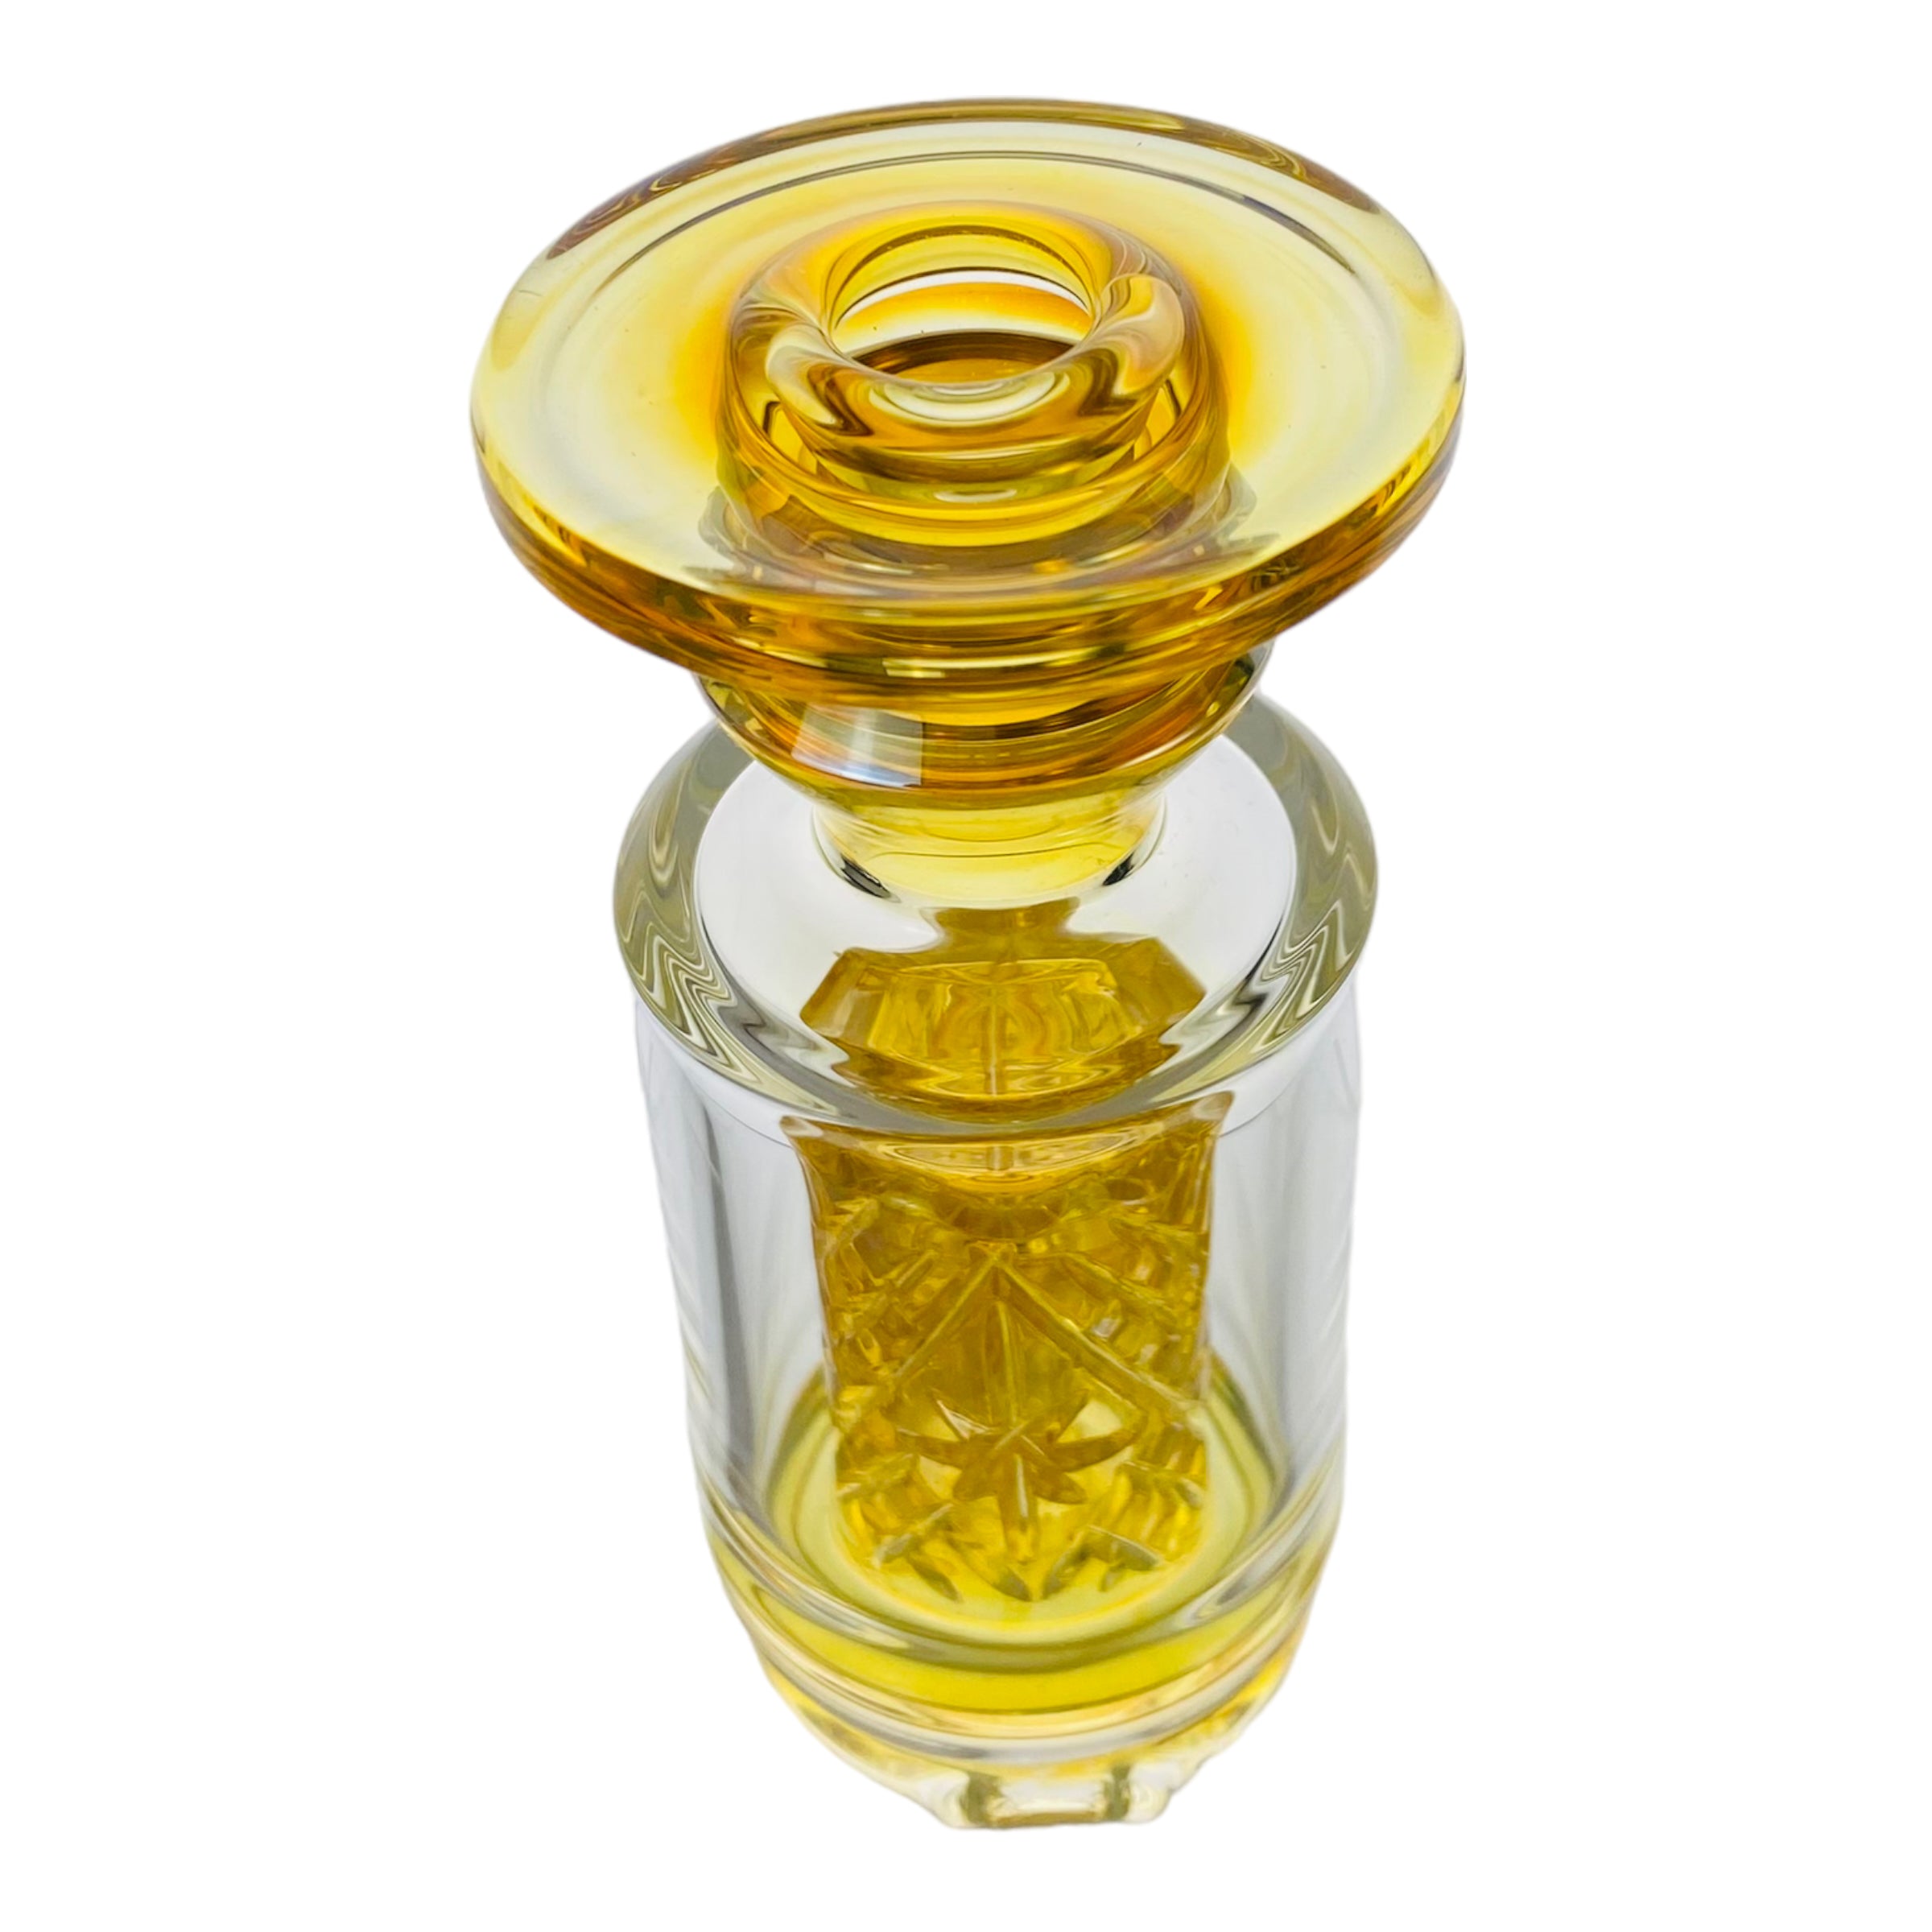 Enjoy And Prosper Glass - Custom Puffco Peak Attachment - Small Fumed Cross Cut Peak Top for sale near you mighty quinn santa rosa ca 